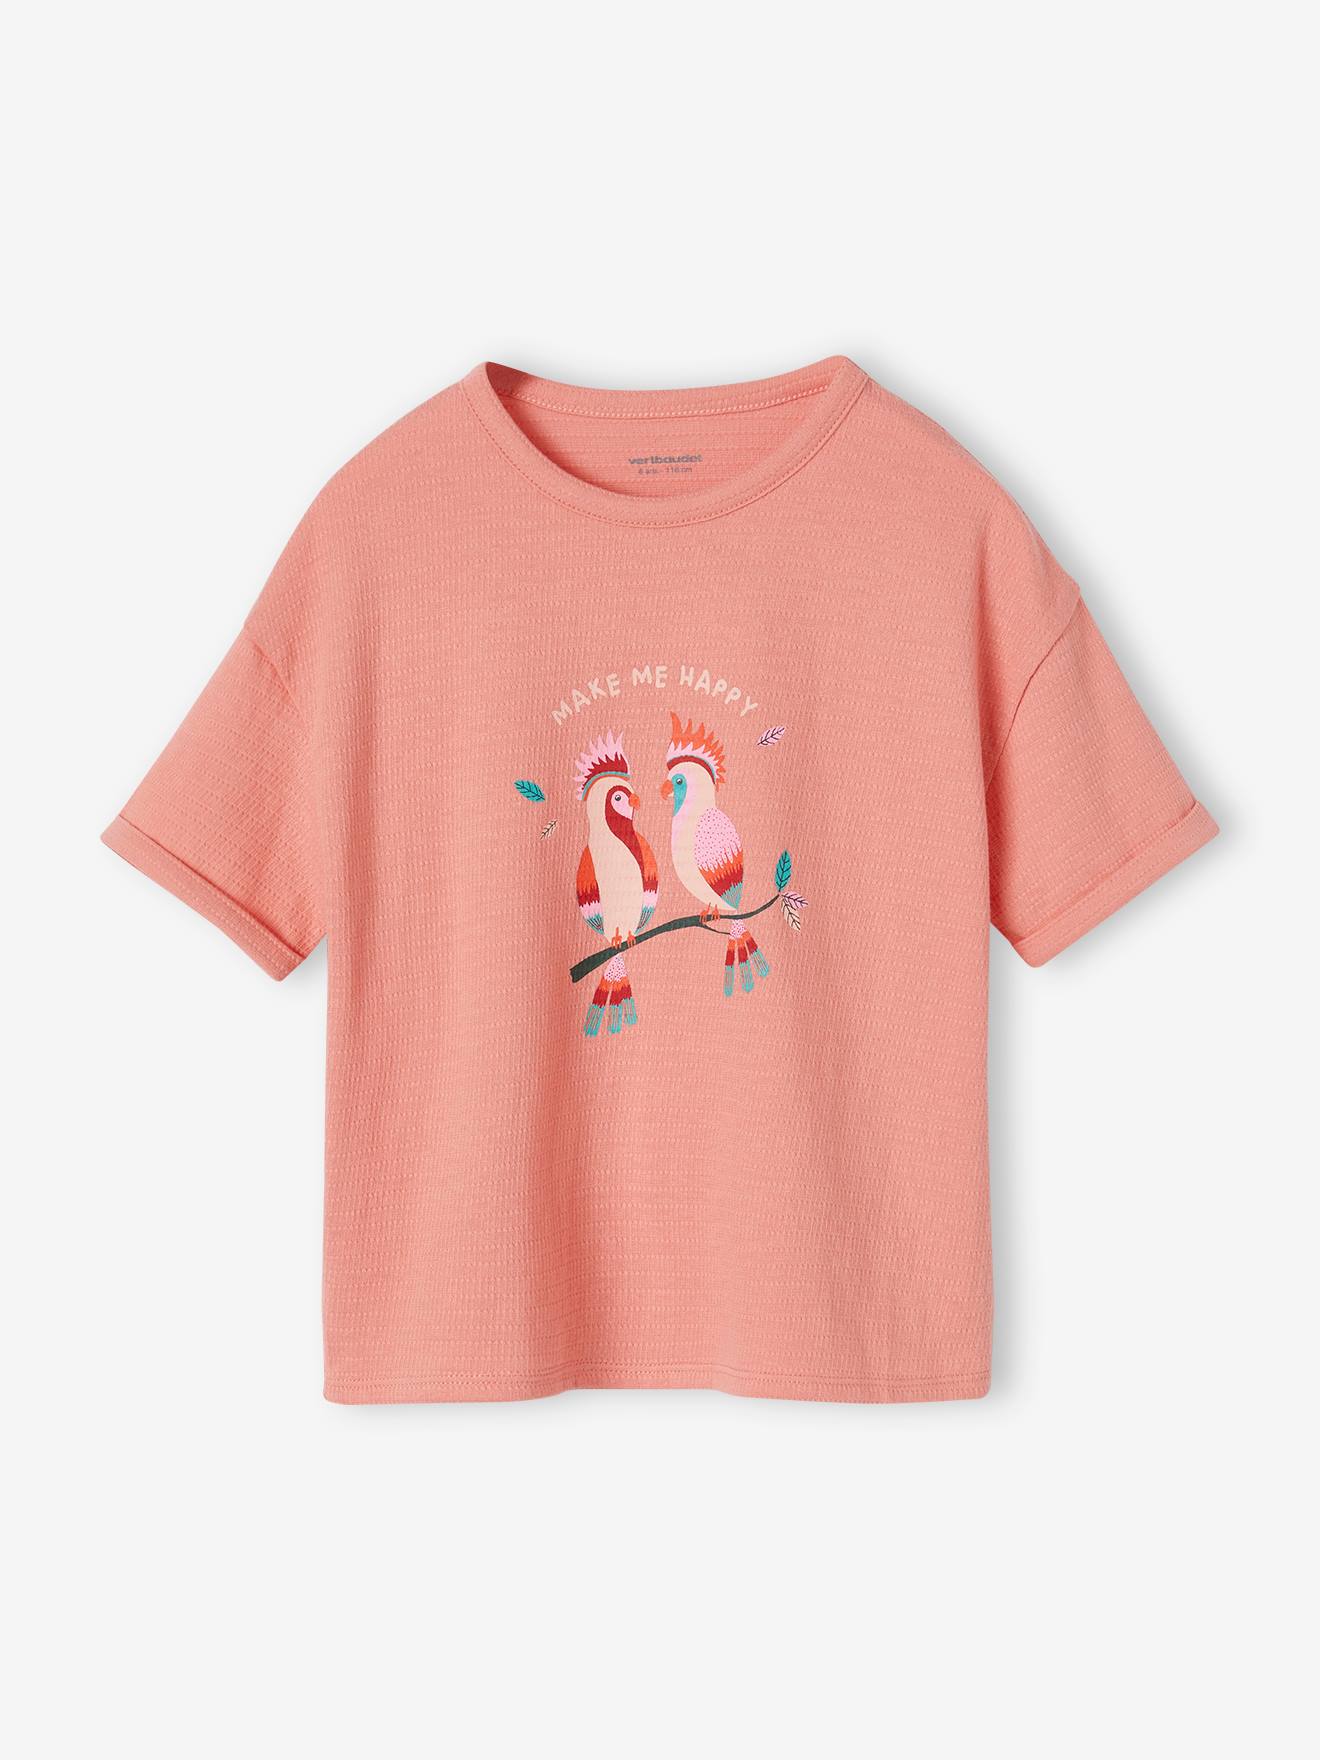 VERTBAUDET Camiseta estampada de punto con relieve para niña coral